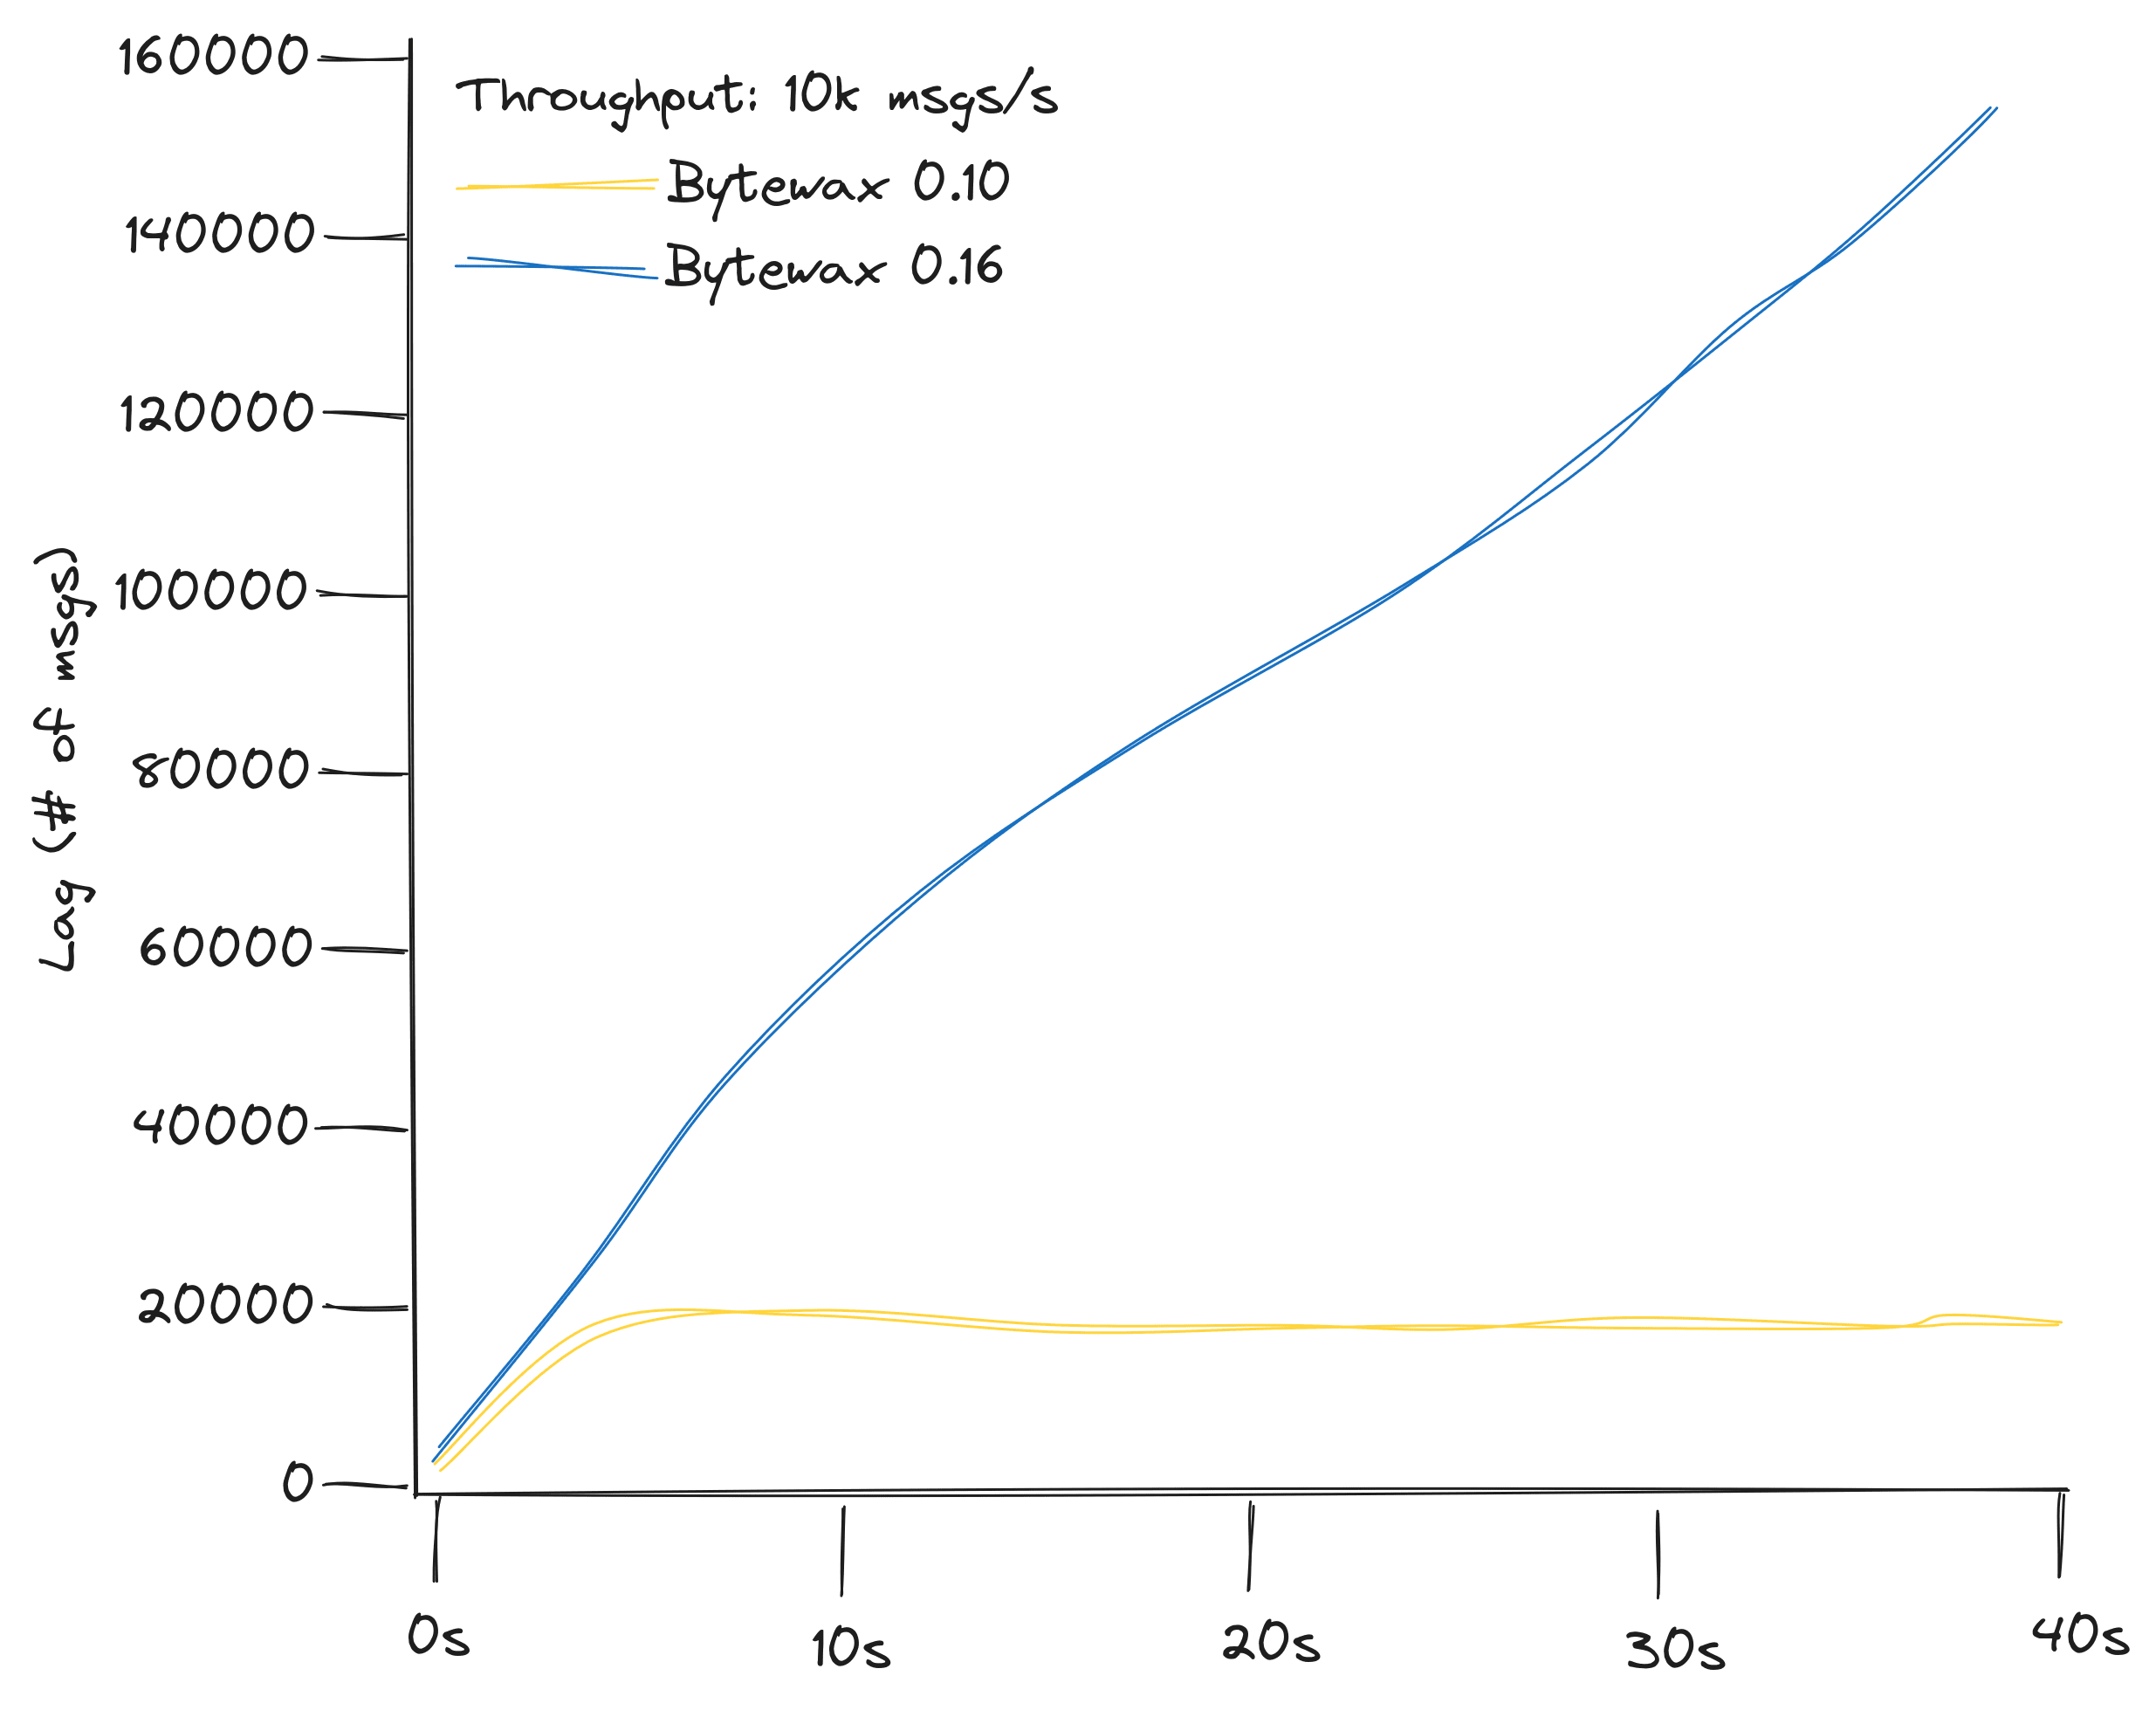 kafka-throughput-1.png